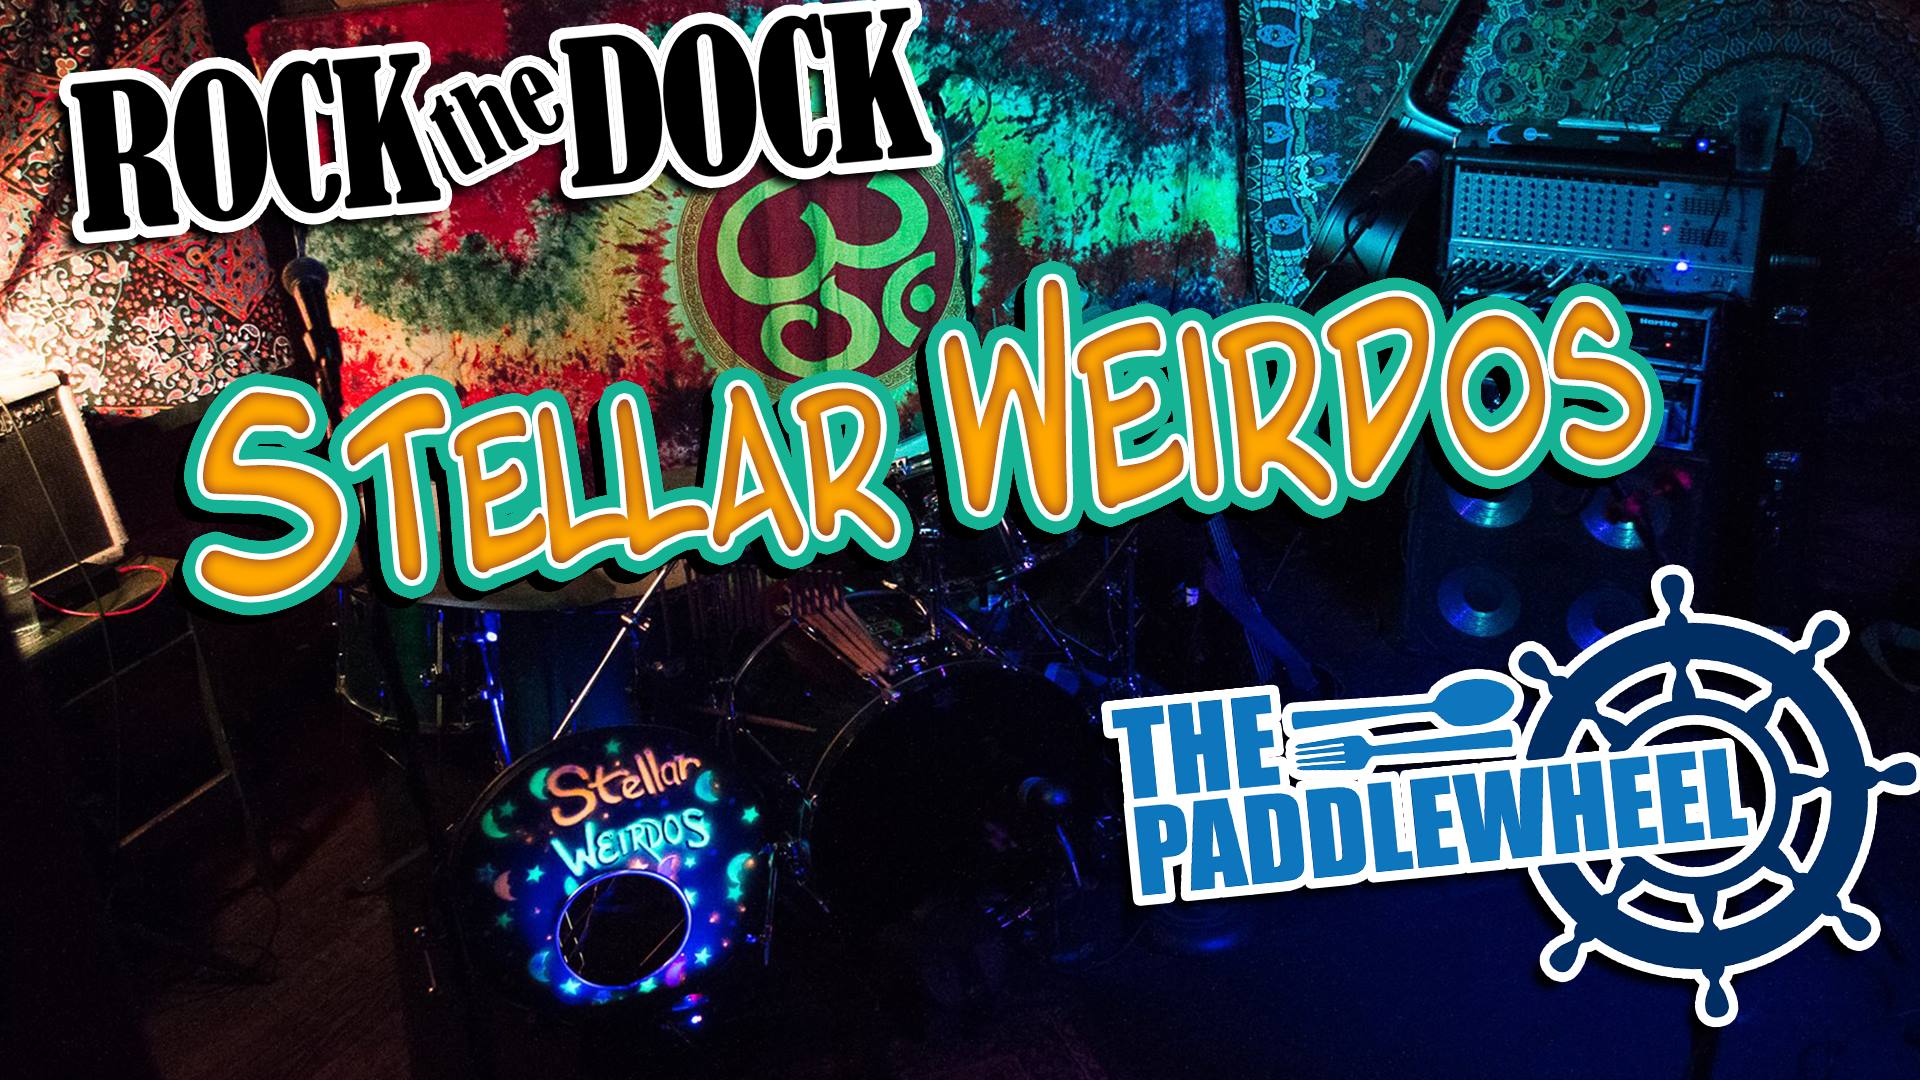 Stellar Weirdos at the Paddlewheel